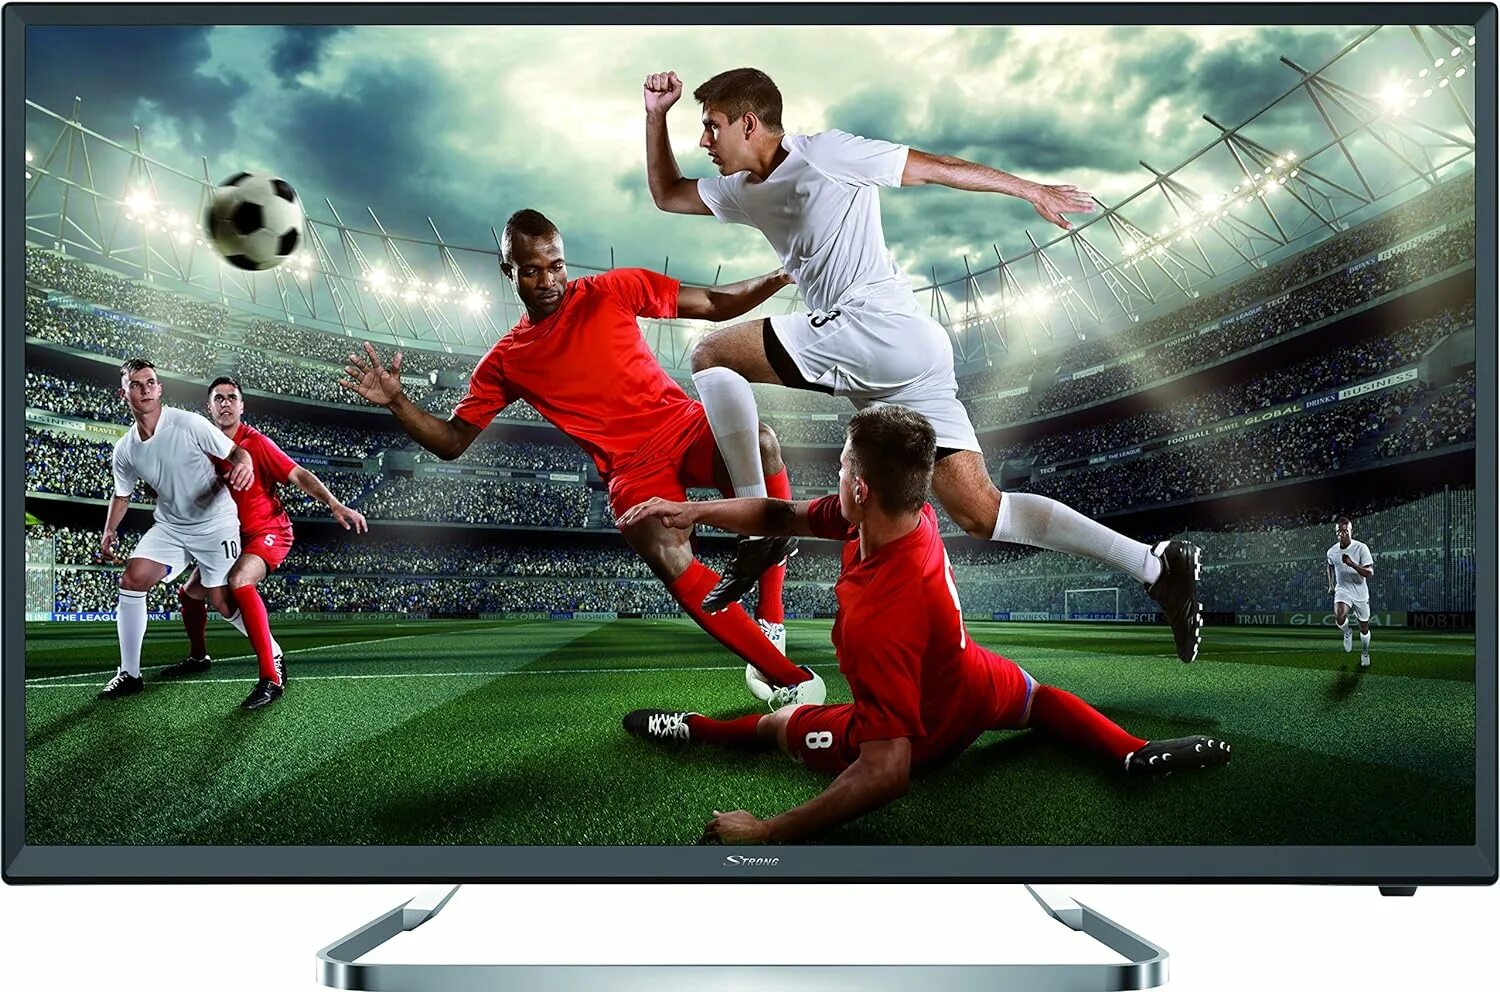 Будет футбол телевизору. Телевизор strong srt 32hz4003nw 32" (2017). Телевизор футбол. Телевизор с футболом картинка. Футбол на экране телевизора.